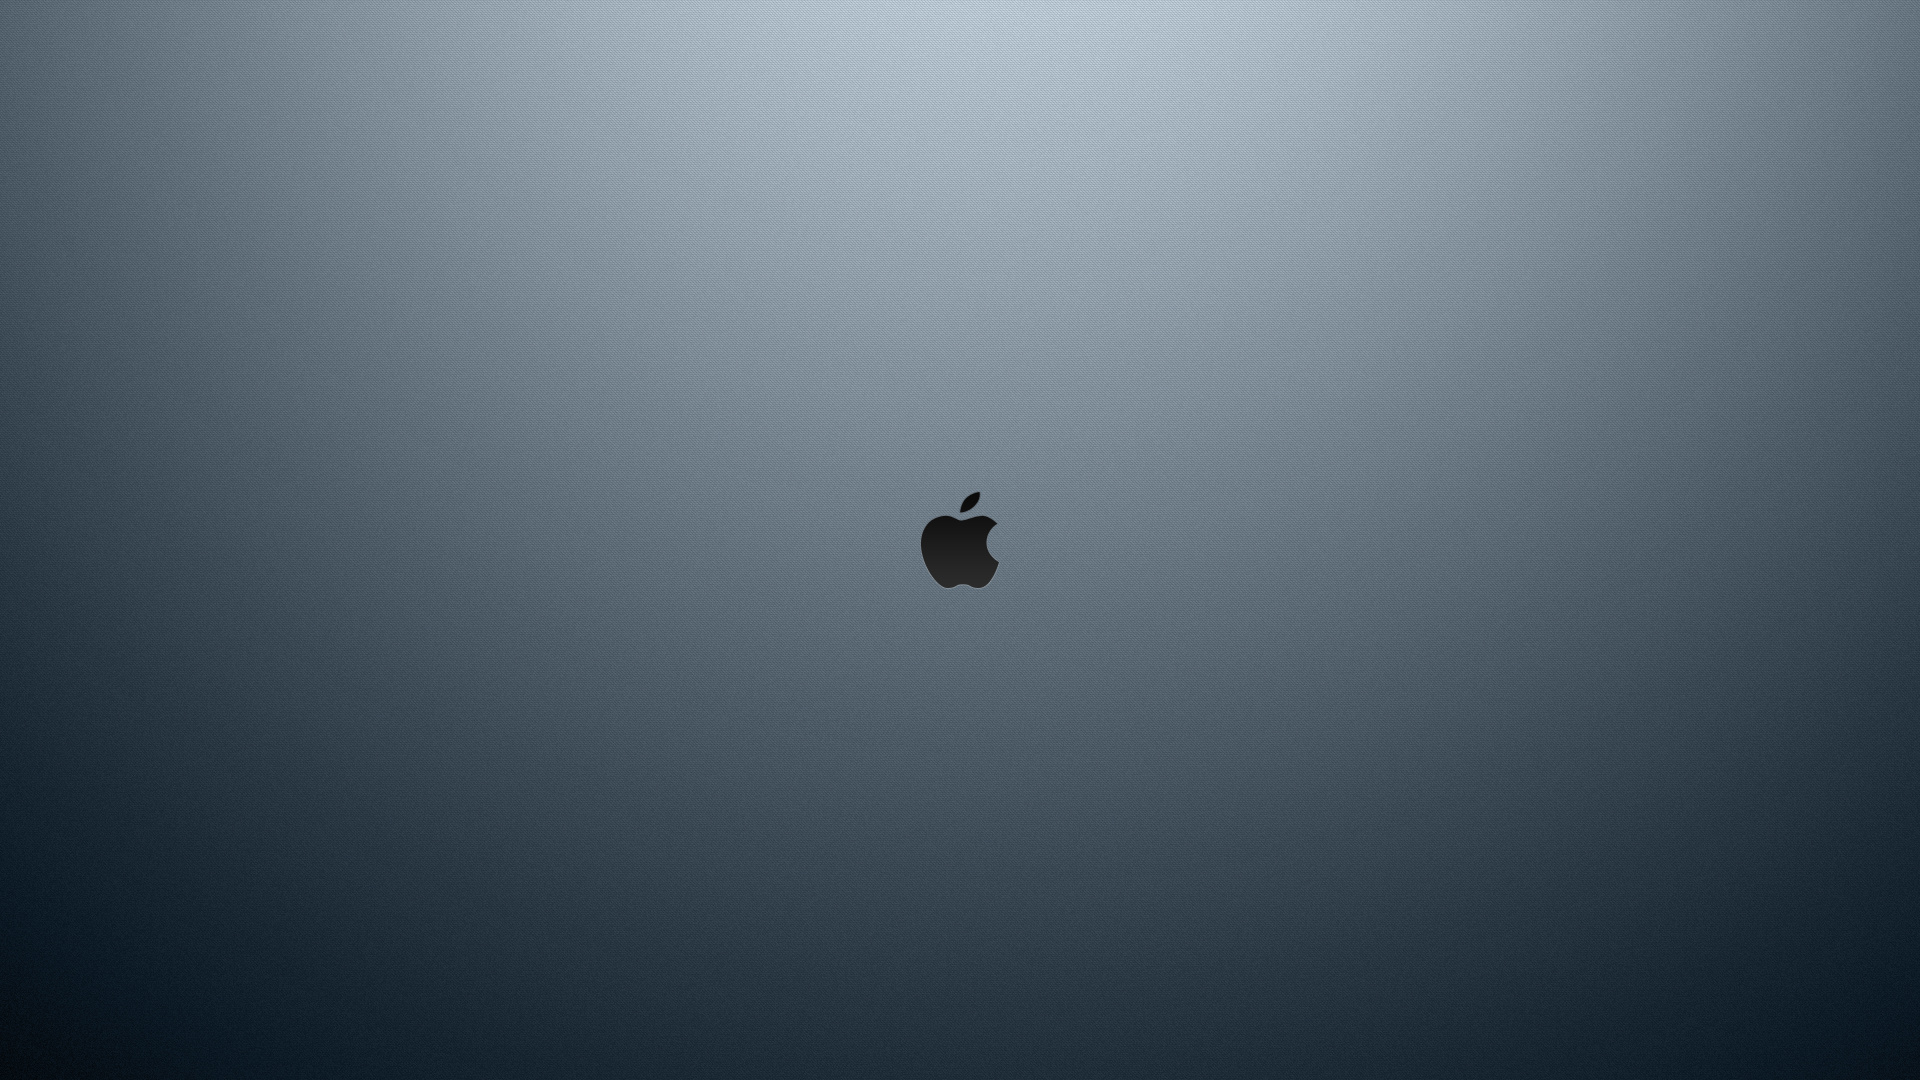 iMac Logo, Apple wallpaper, Michelle Simpson's collection, Mac aesthetics, 1920x1080 Full HD Desktop